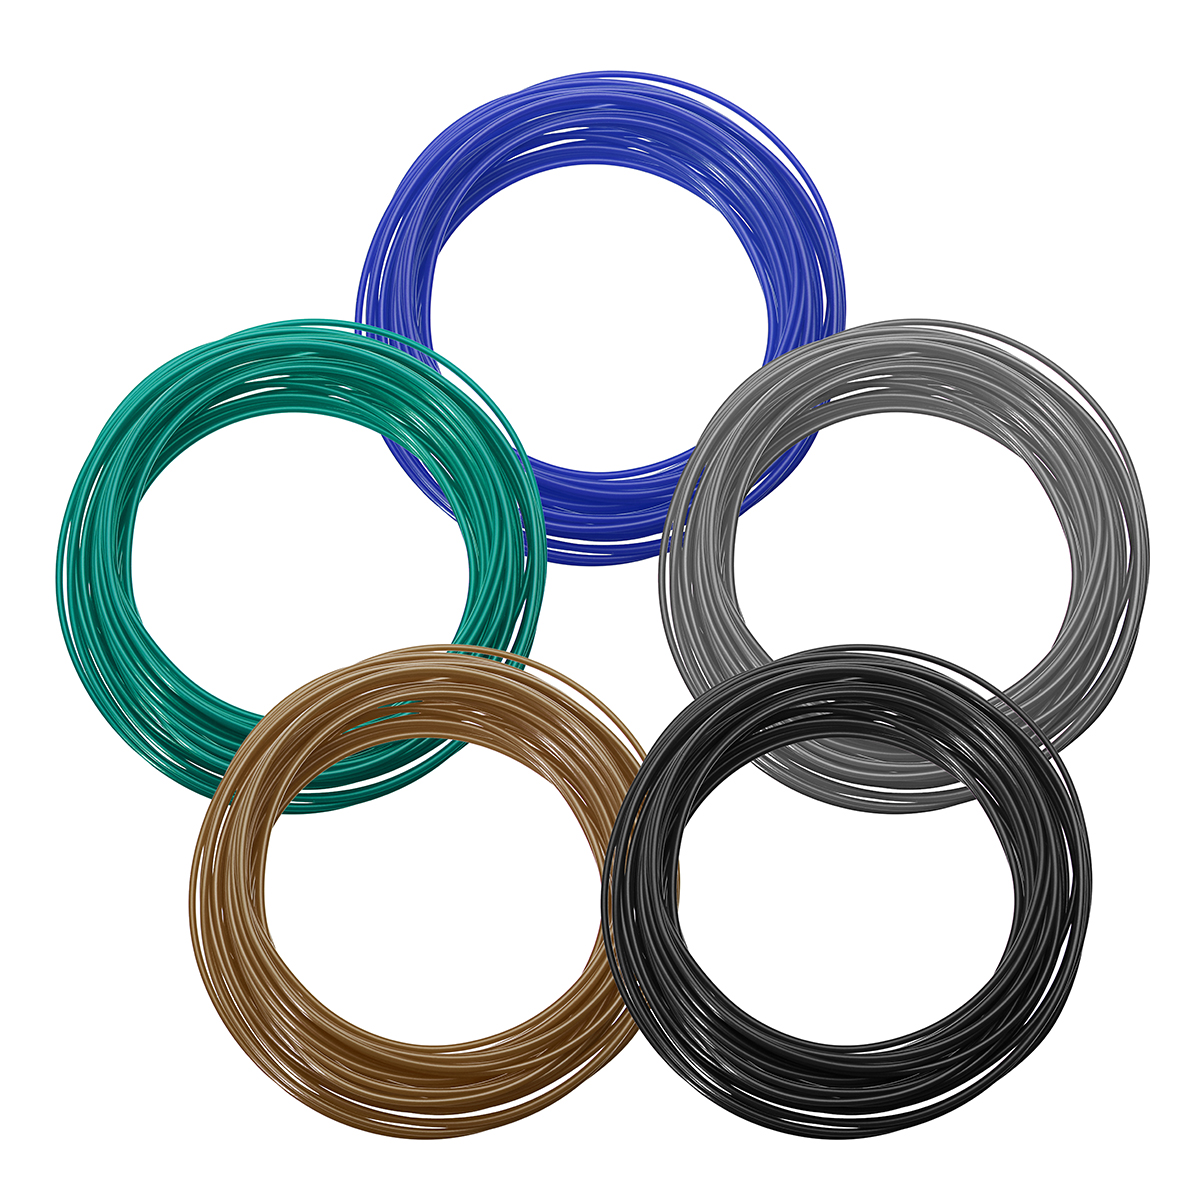 20 Colors/Pack 5/10m Length Per Color PLA 1.75mm Filament for 3D Printing Pen 0.4mm Nozzle 38